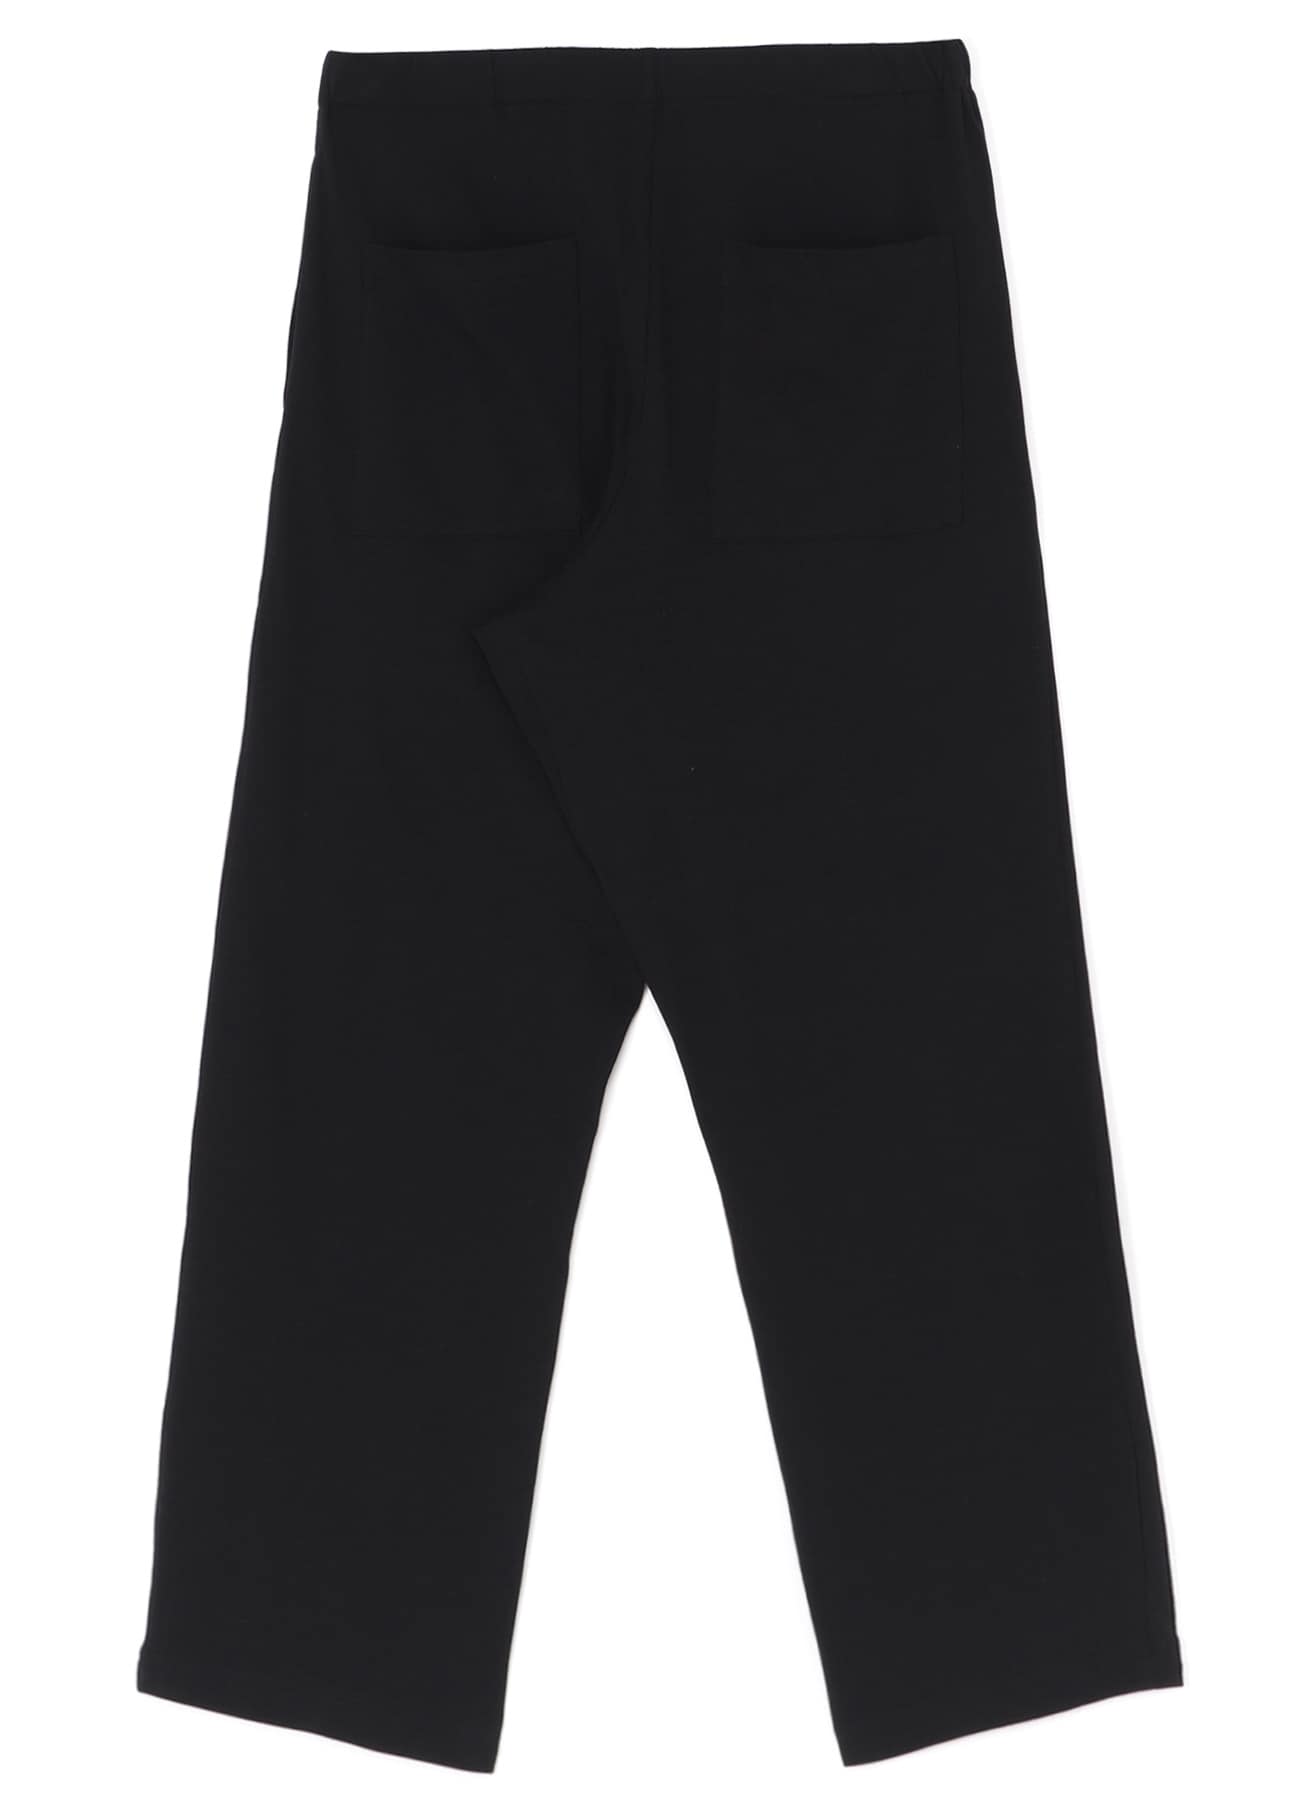 Buy Black Slim Fit Cotton Pants by